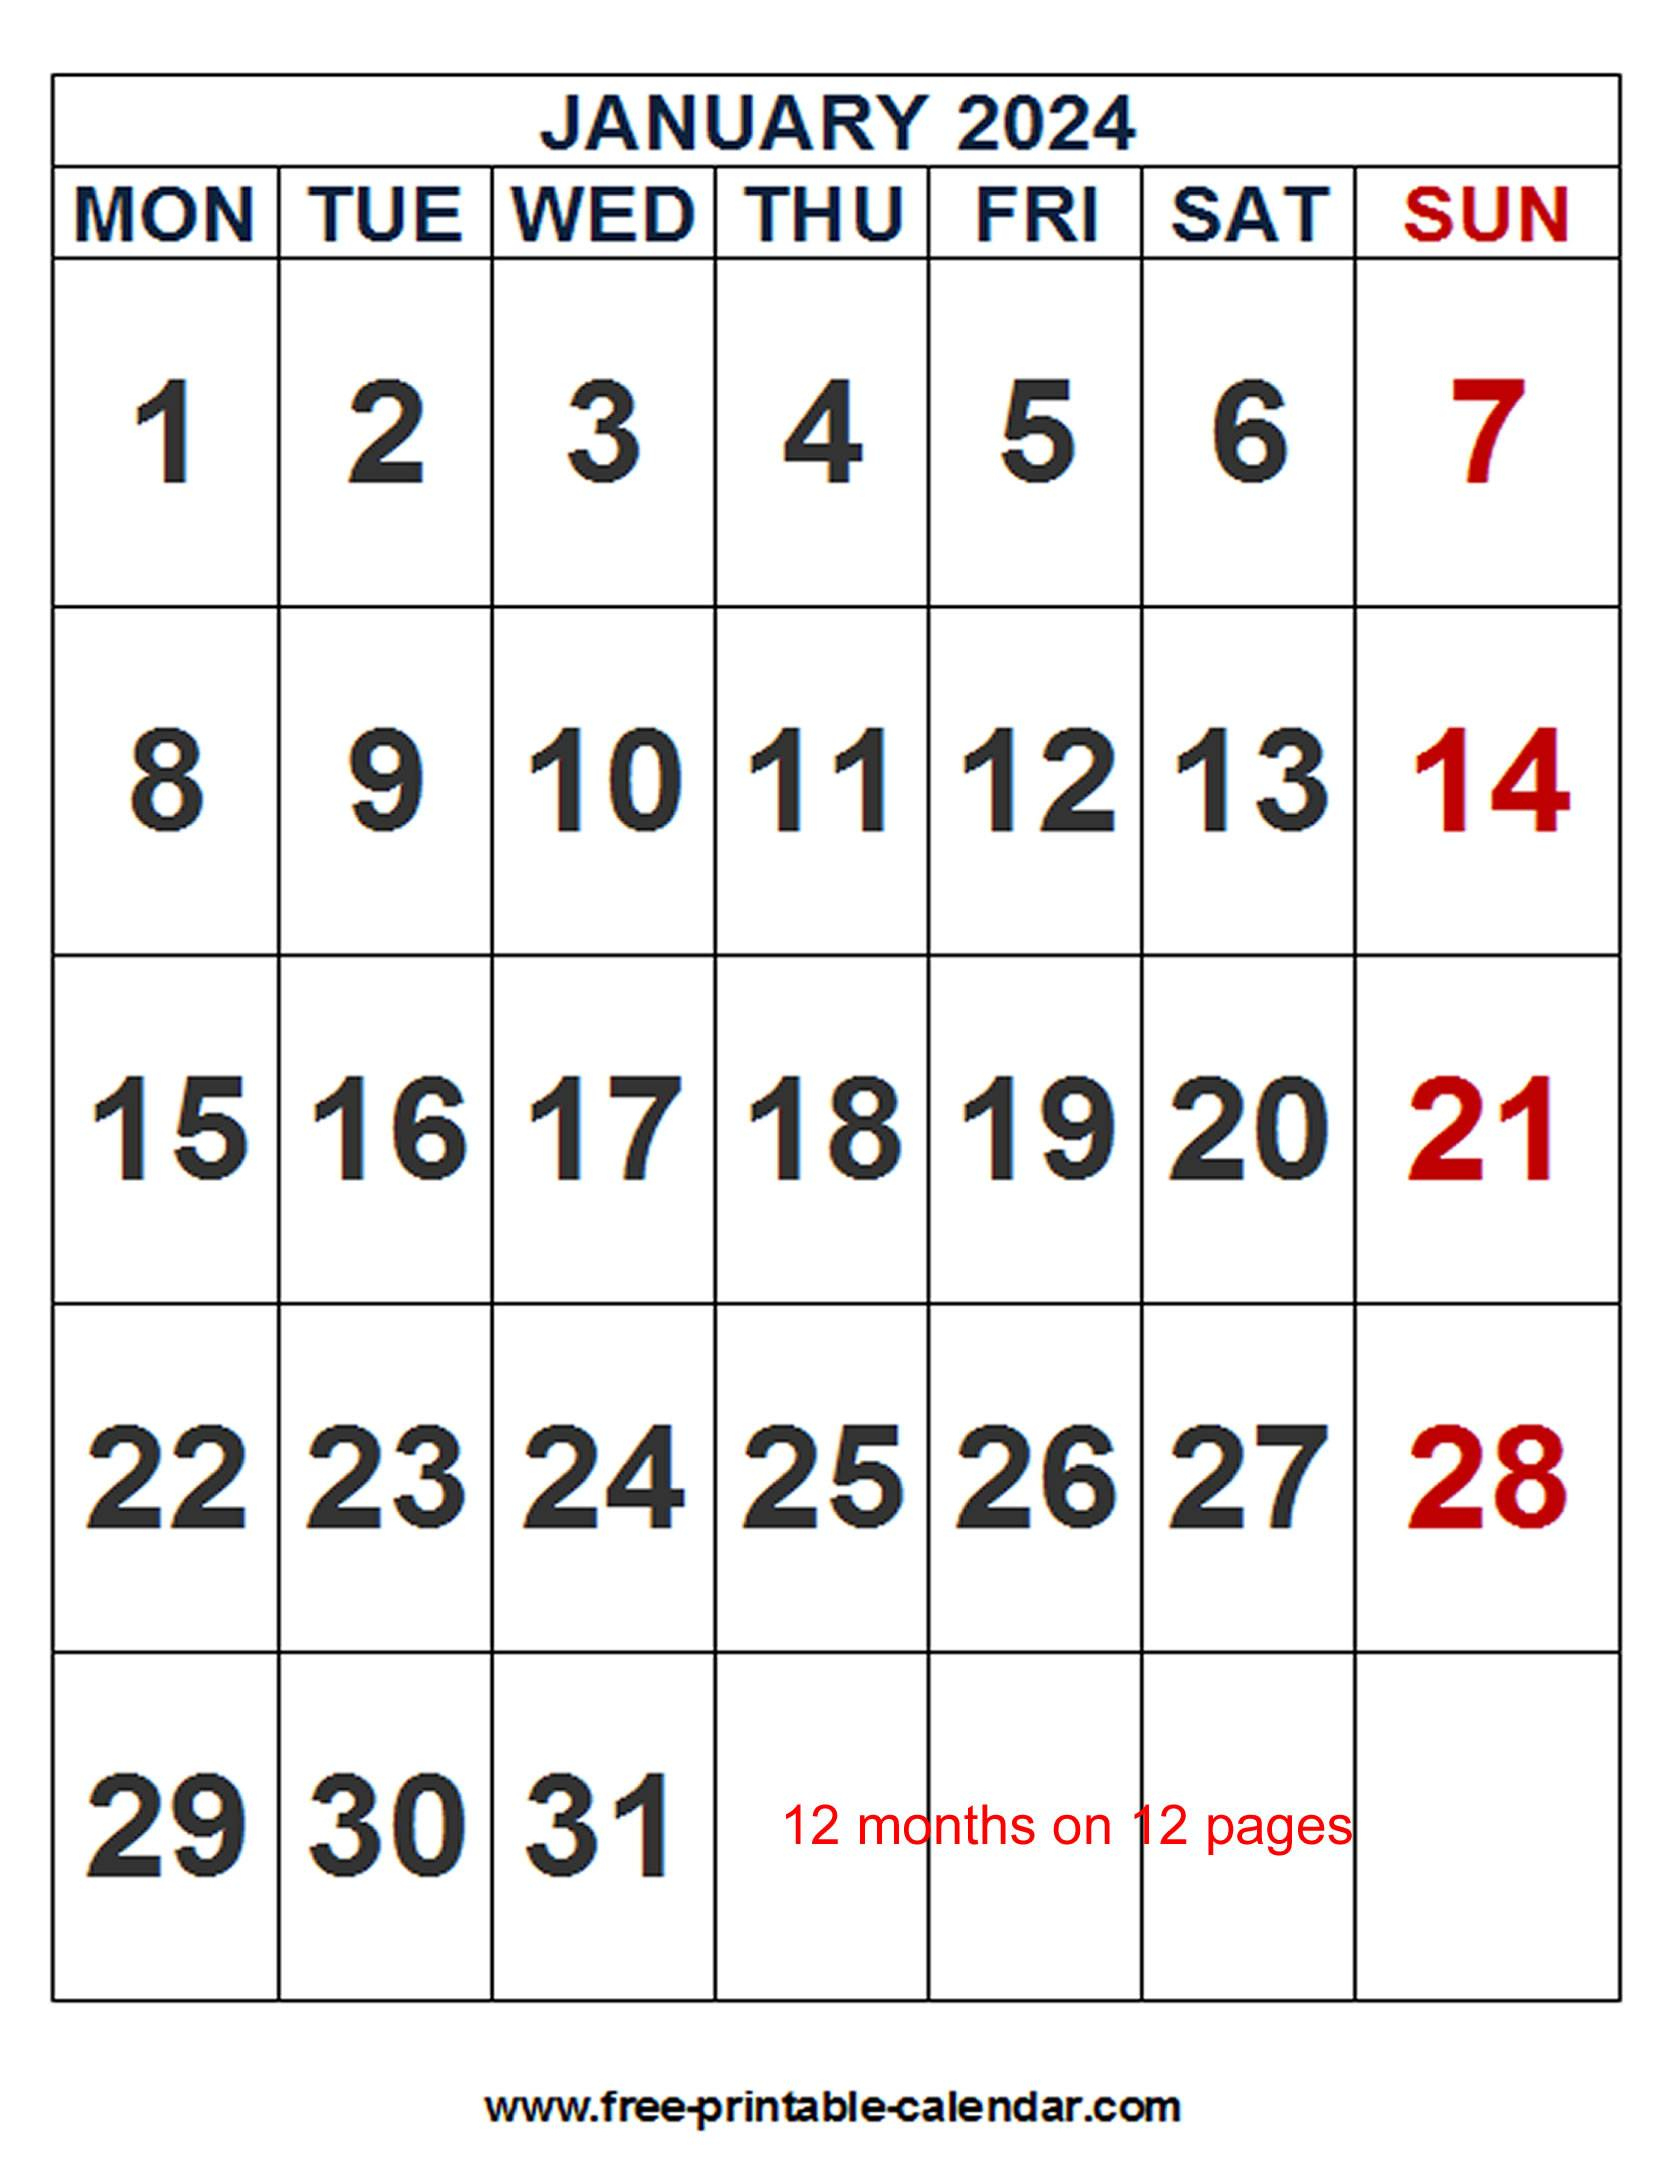 2024 Calendar Word Template - Free-Printable-Calendar | Free Printable Calendar 2024 Word